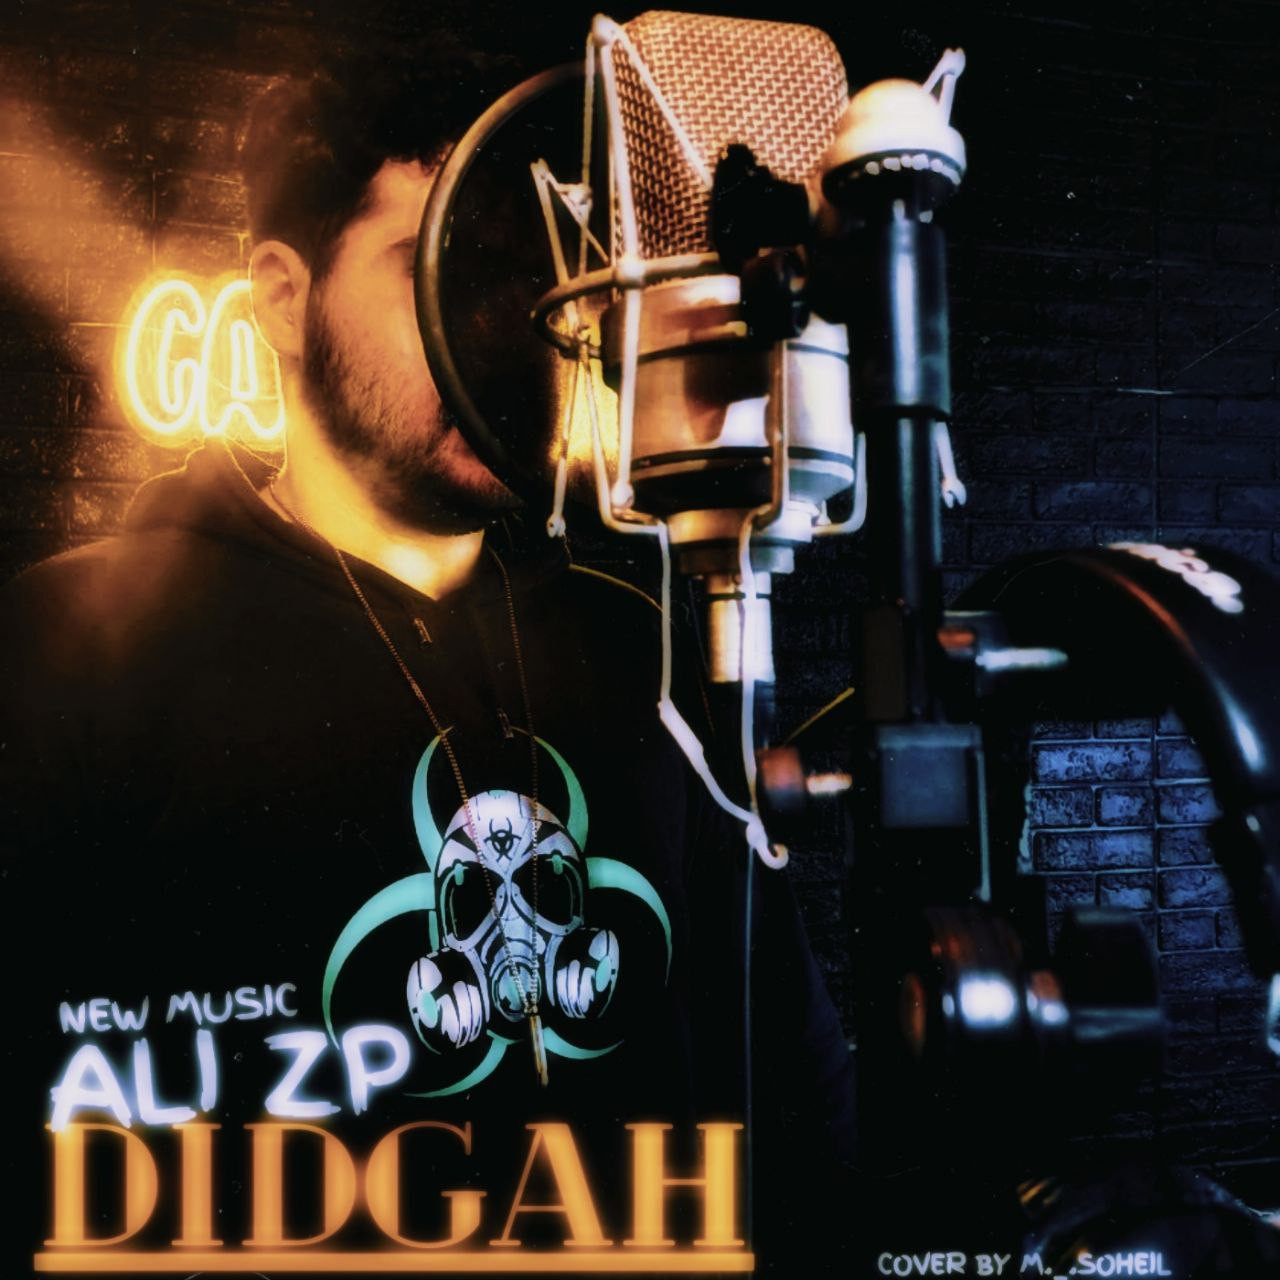 Ali ZP - Didgah